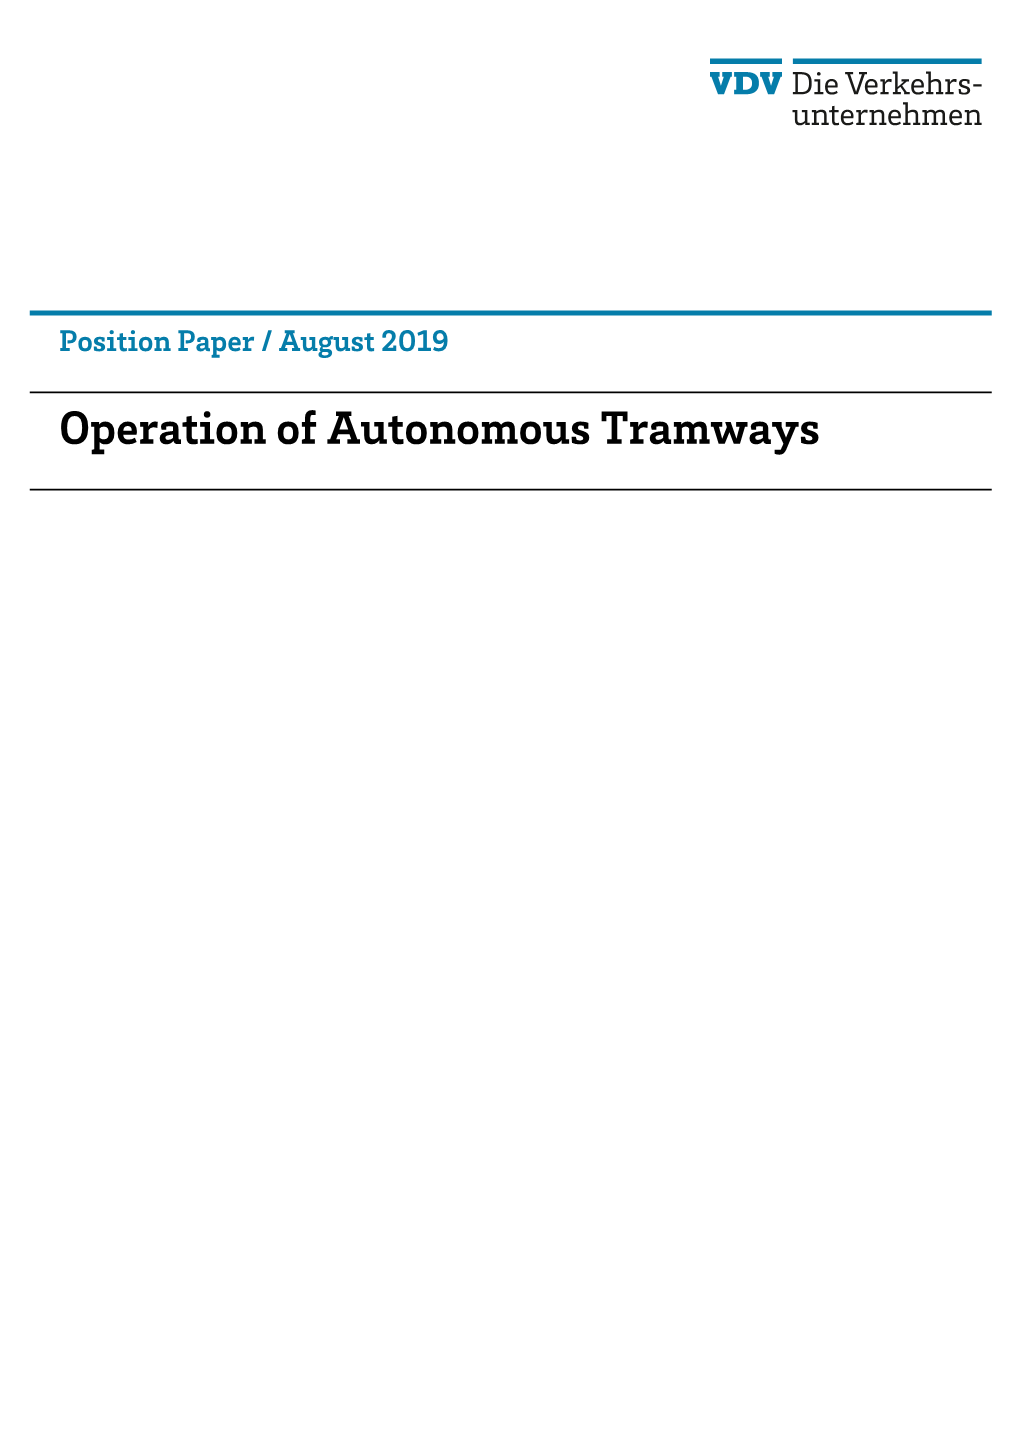 Operation of Autonomous Tramways